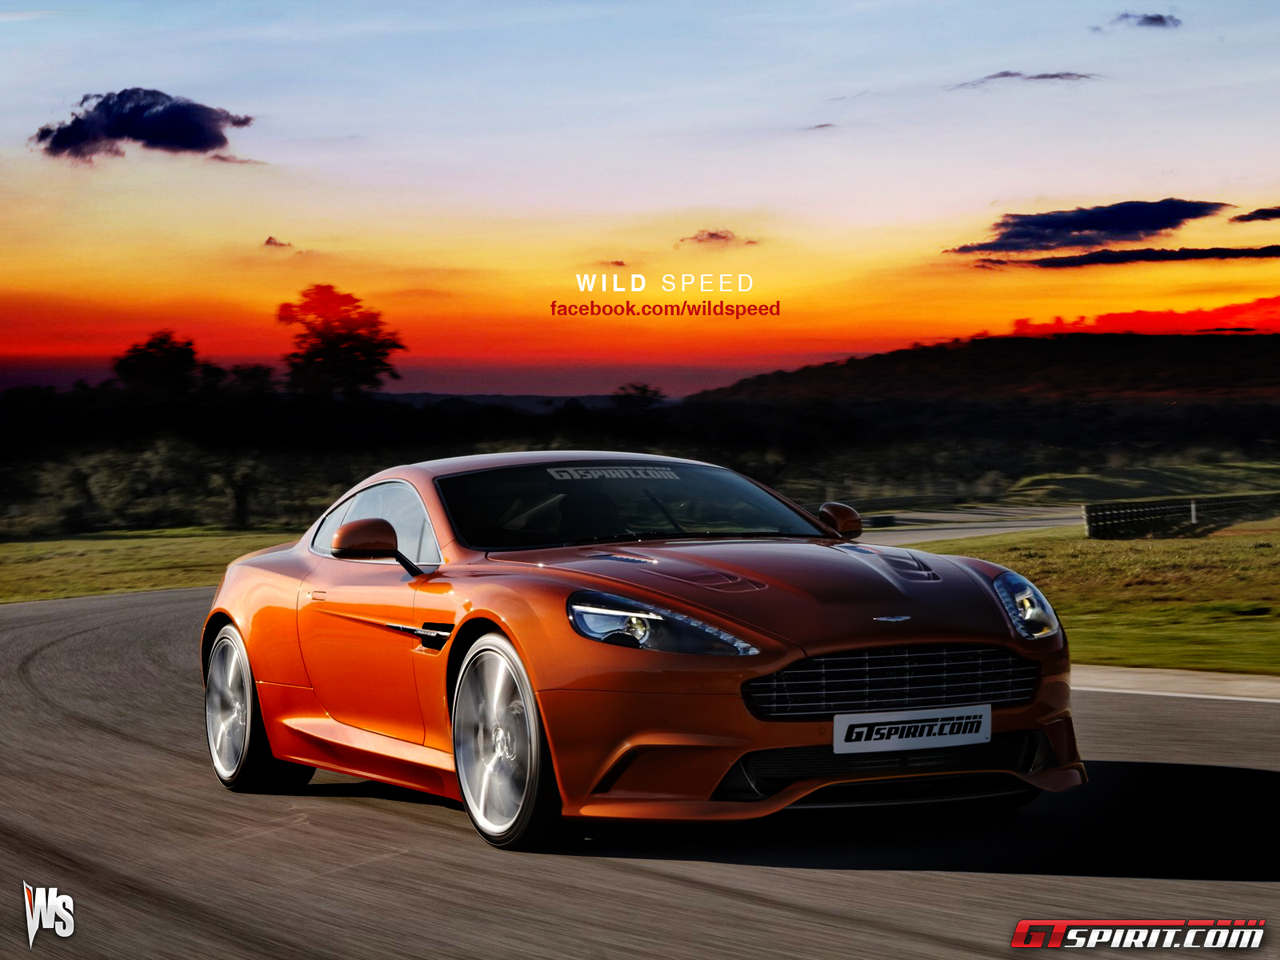 Thread: 2013 Aston Martin DBS Renderings